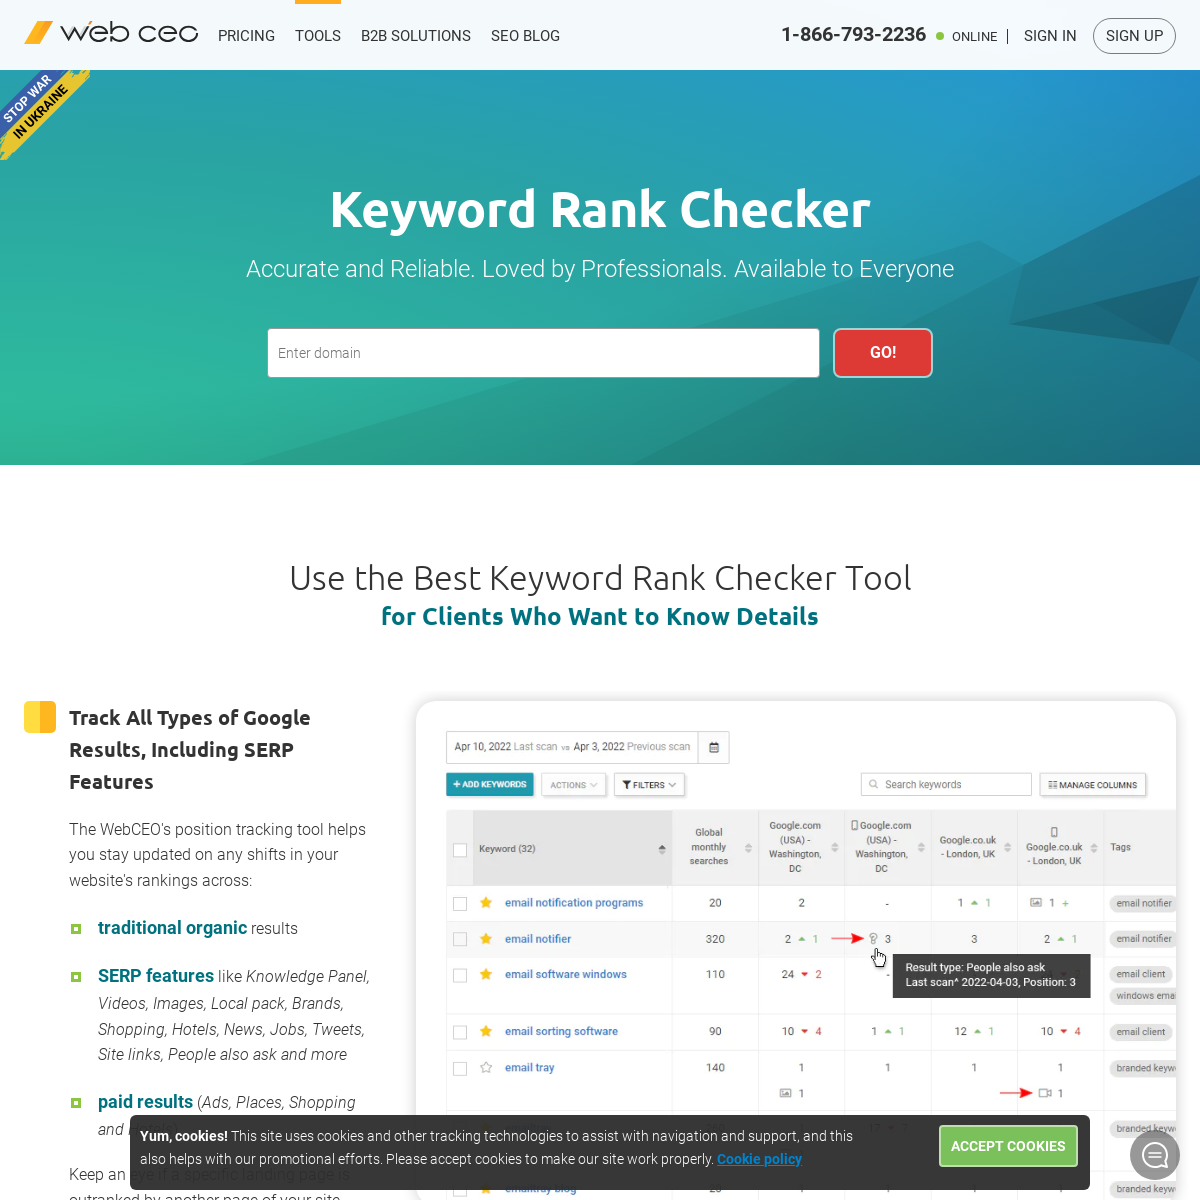 Free Keyword Rank Checker Tool Online for Google, Yahoo, Bing